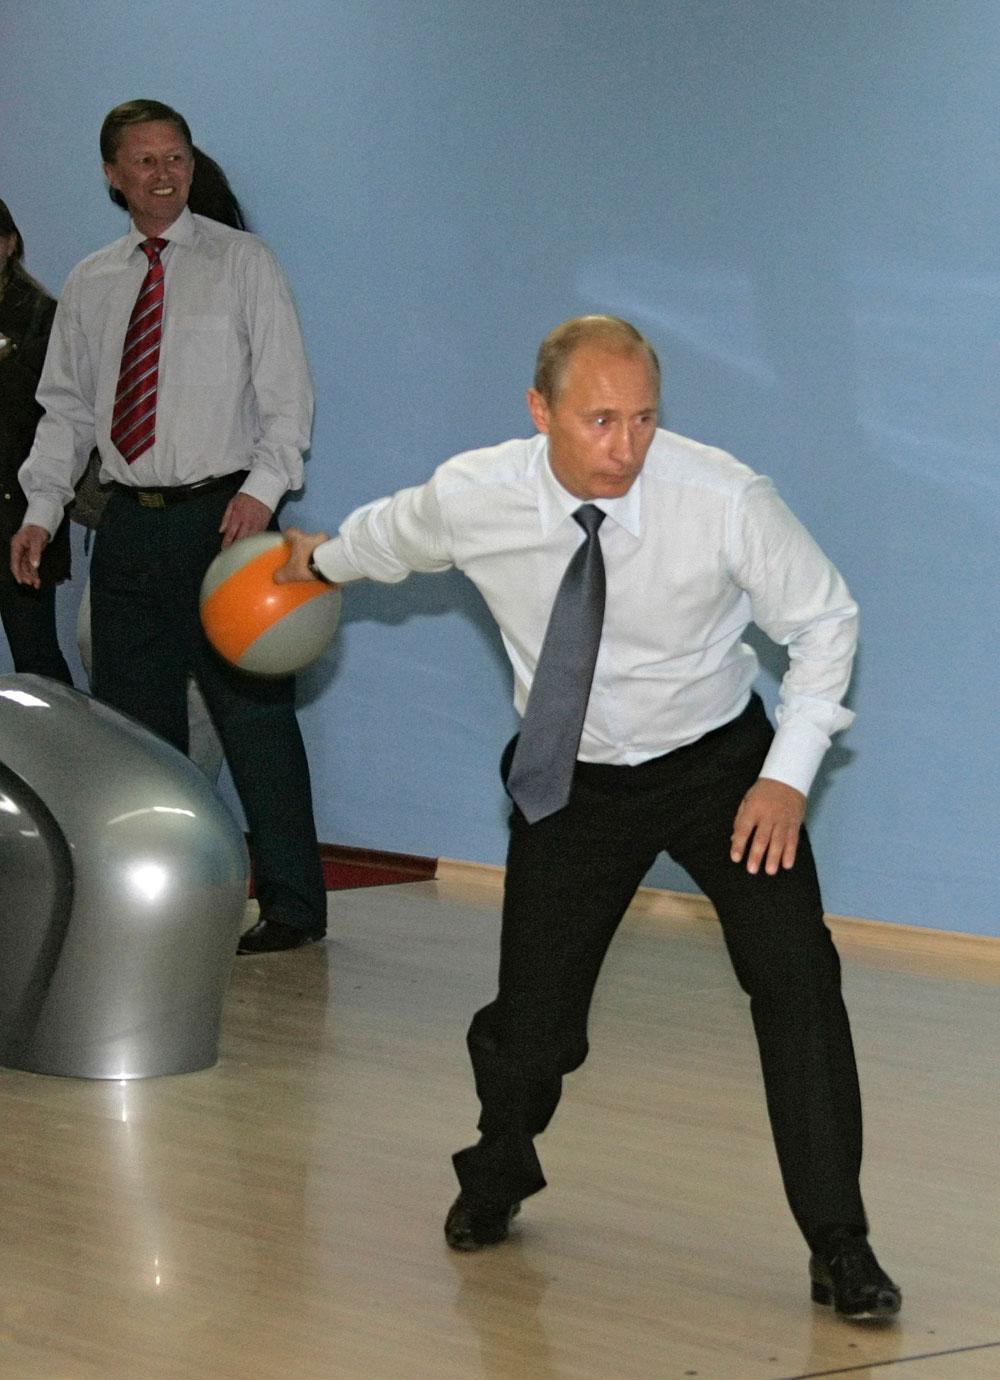 Putin bowlar på en rysk u-båtsbas.